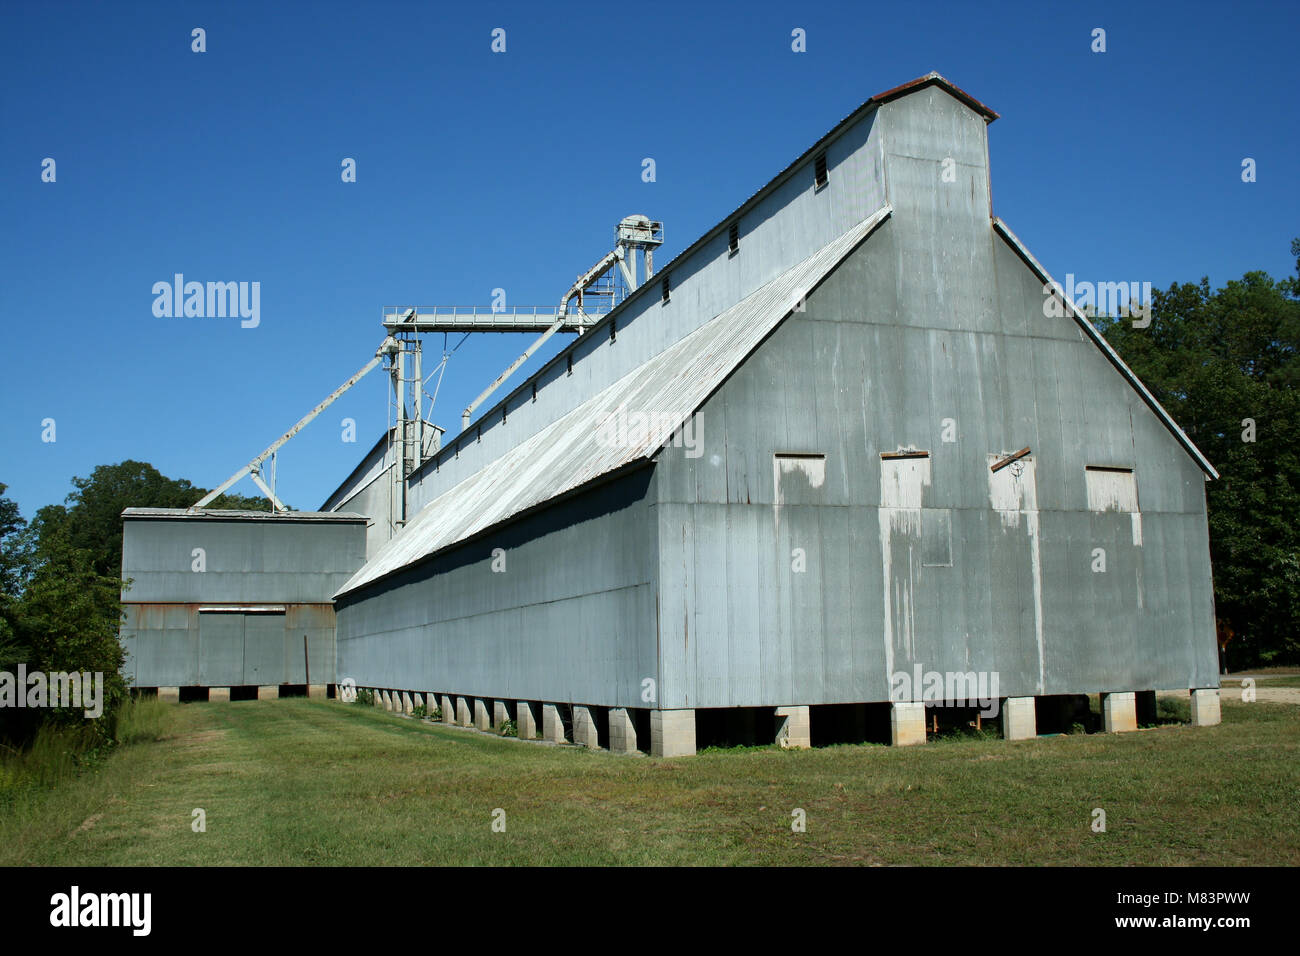 A Peanut Processing Plant against a blue sky Stock Photo